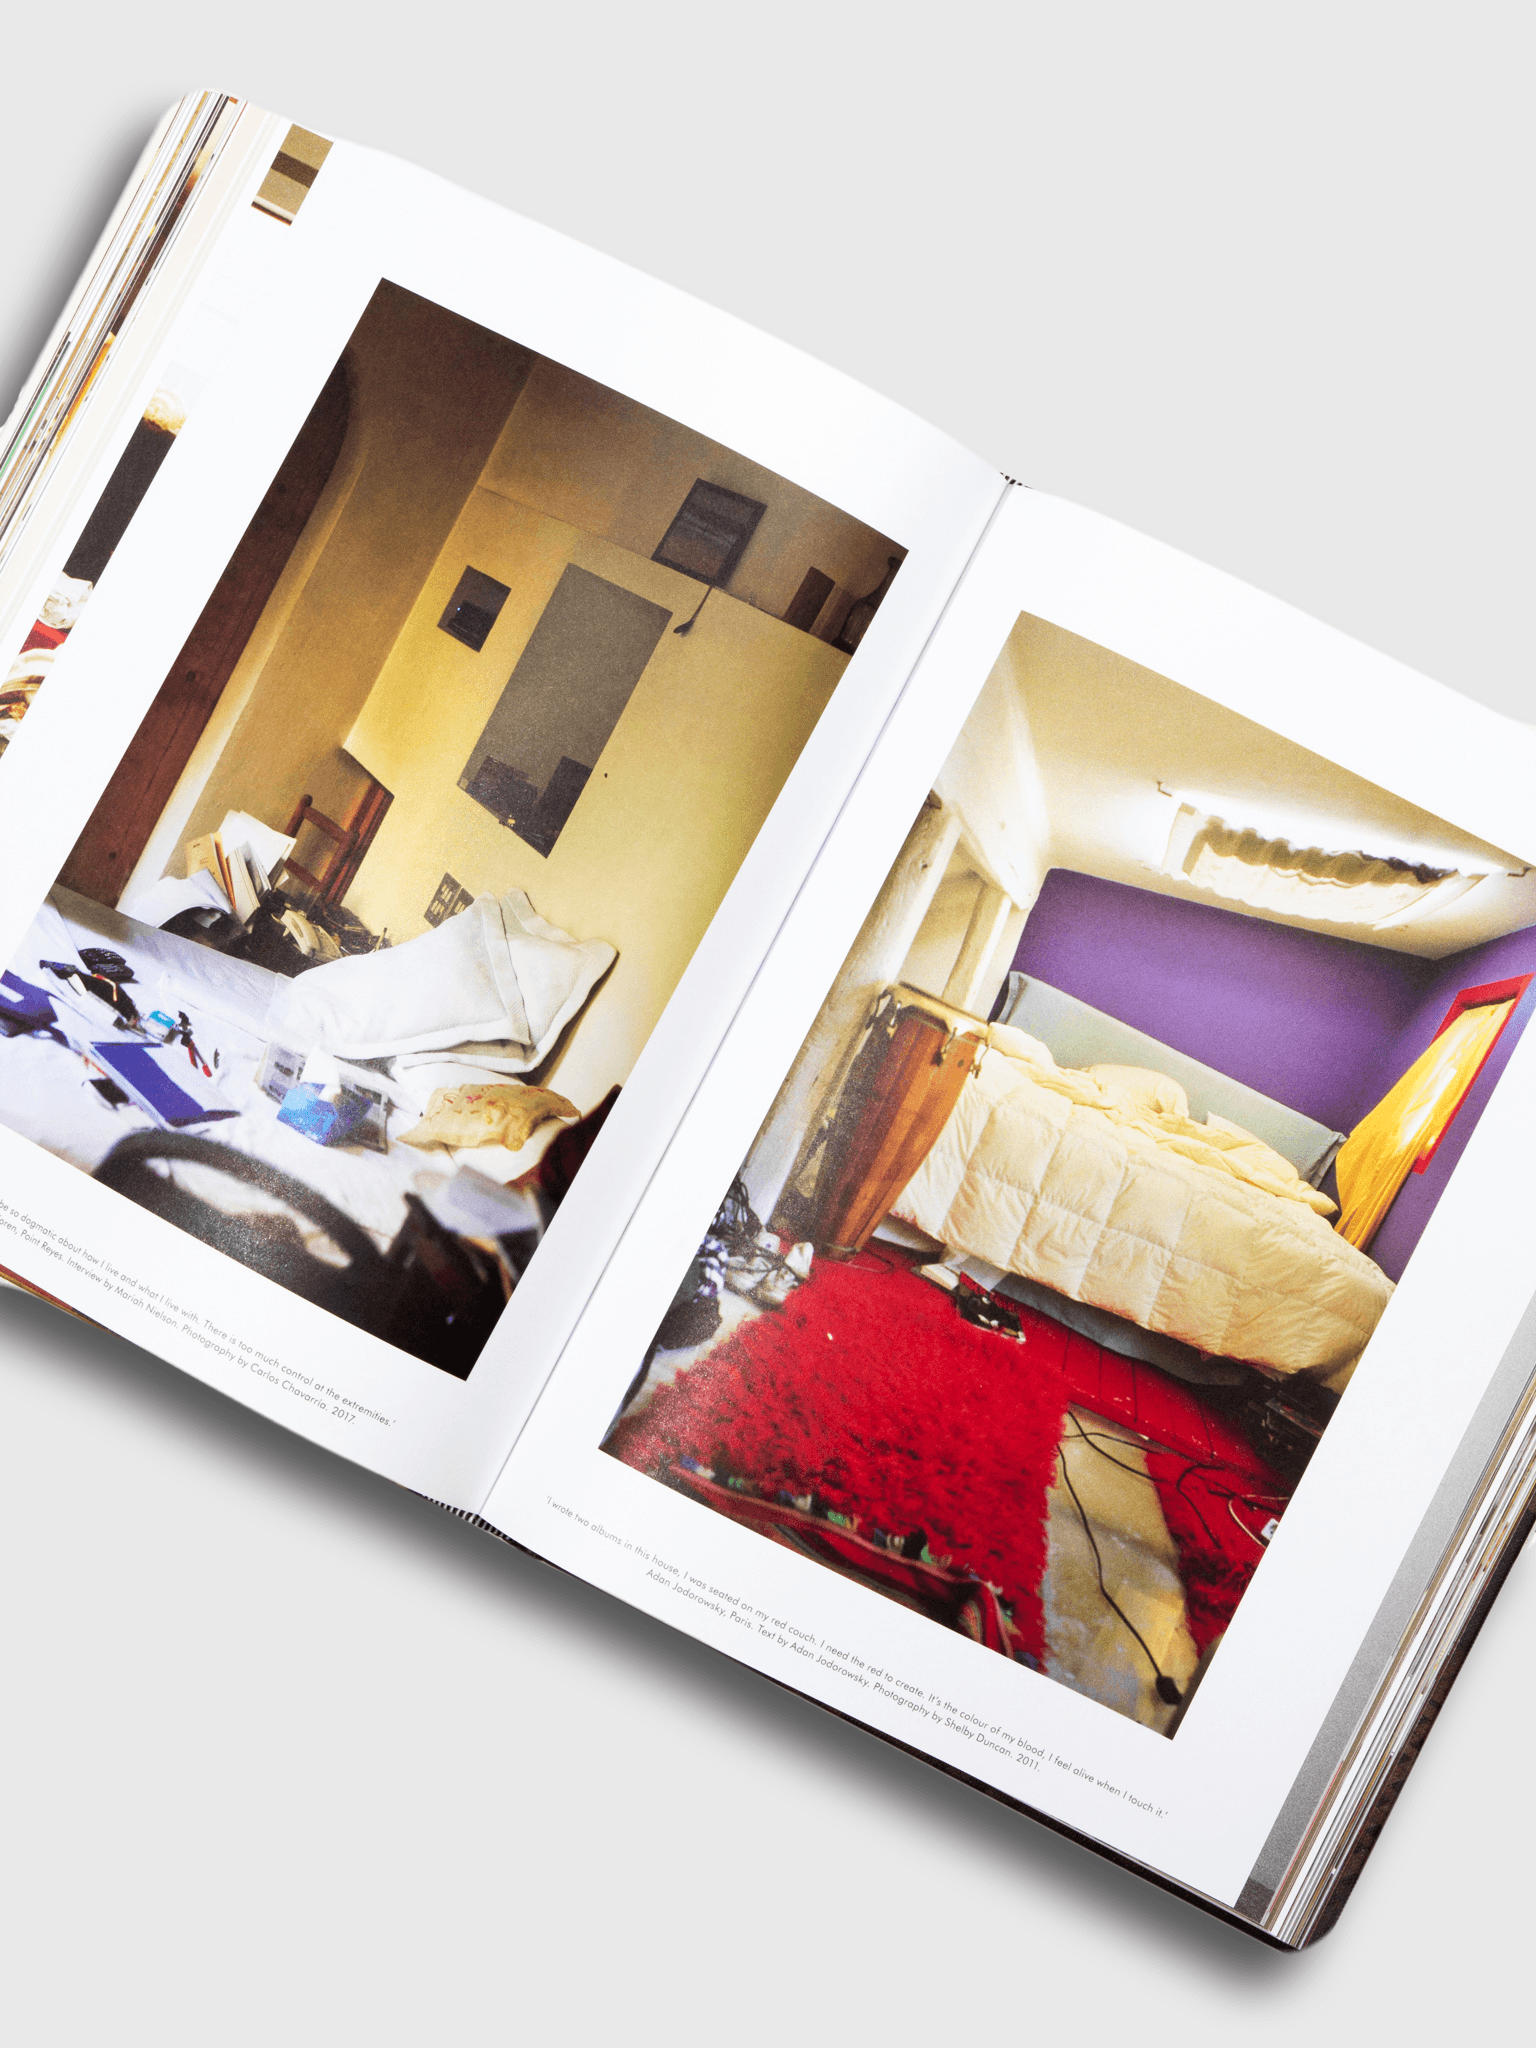 Bi-Rite Studio The World of Apartamento 10 Years of Everyday Life Interiors ISBN 1-4197-2892-X book